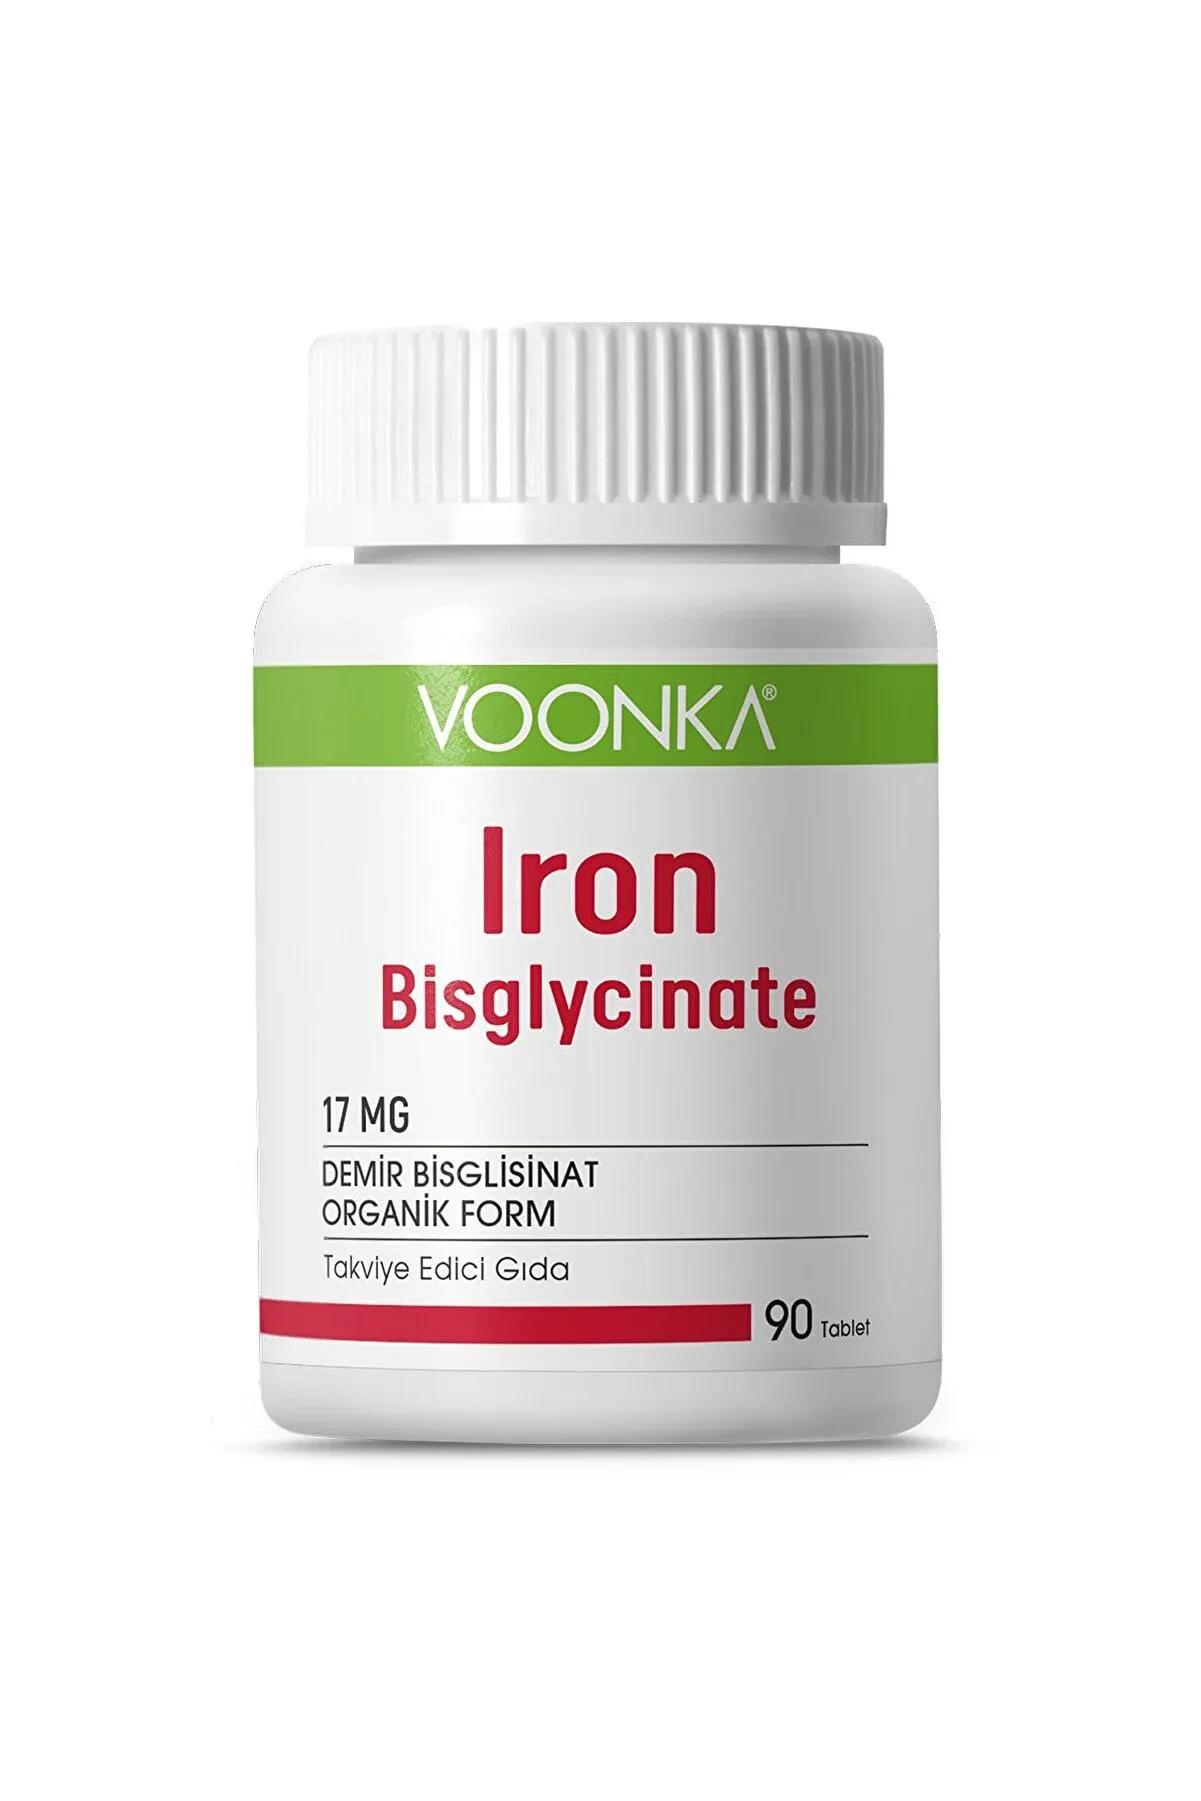 Voonka Iron Bisglycinate İnceleme